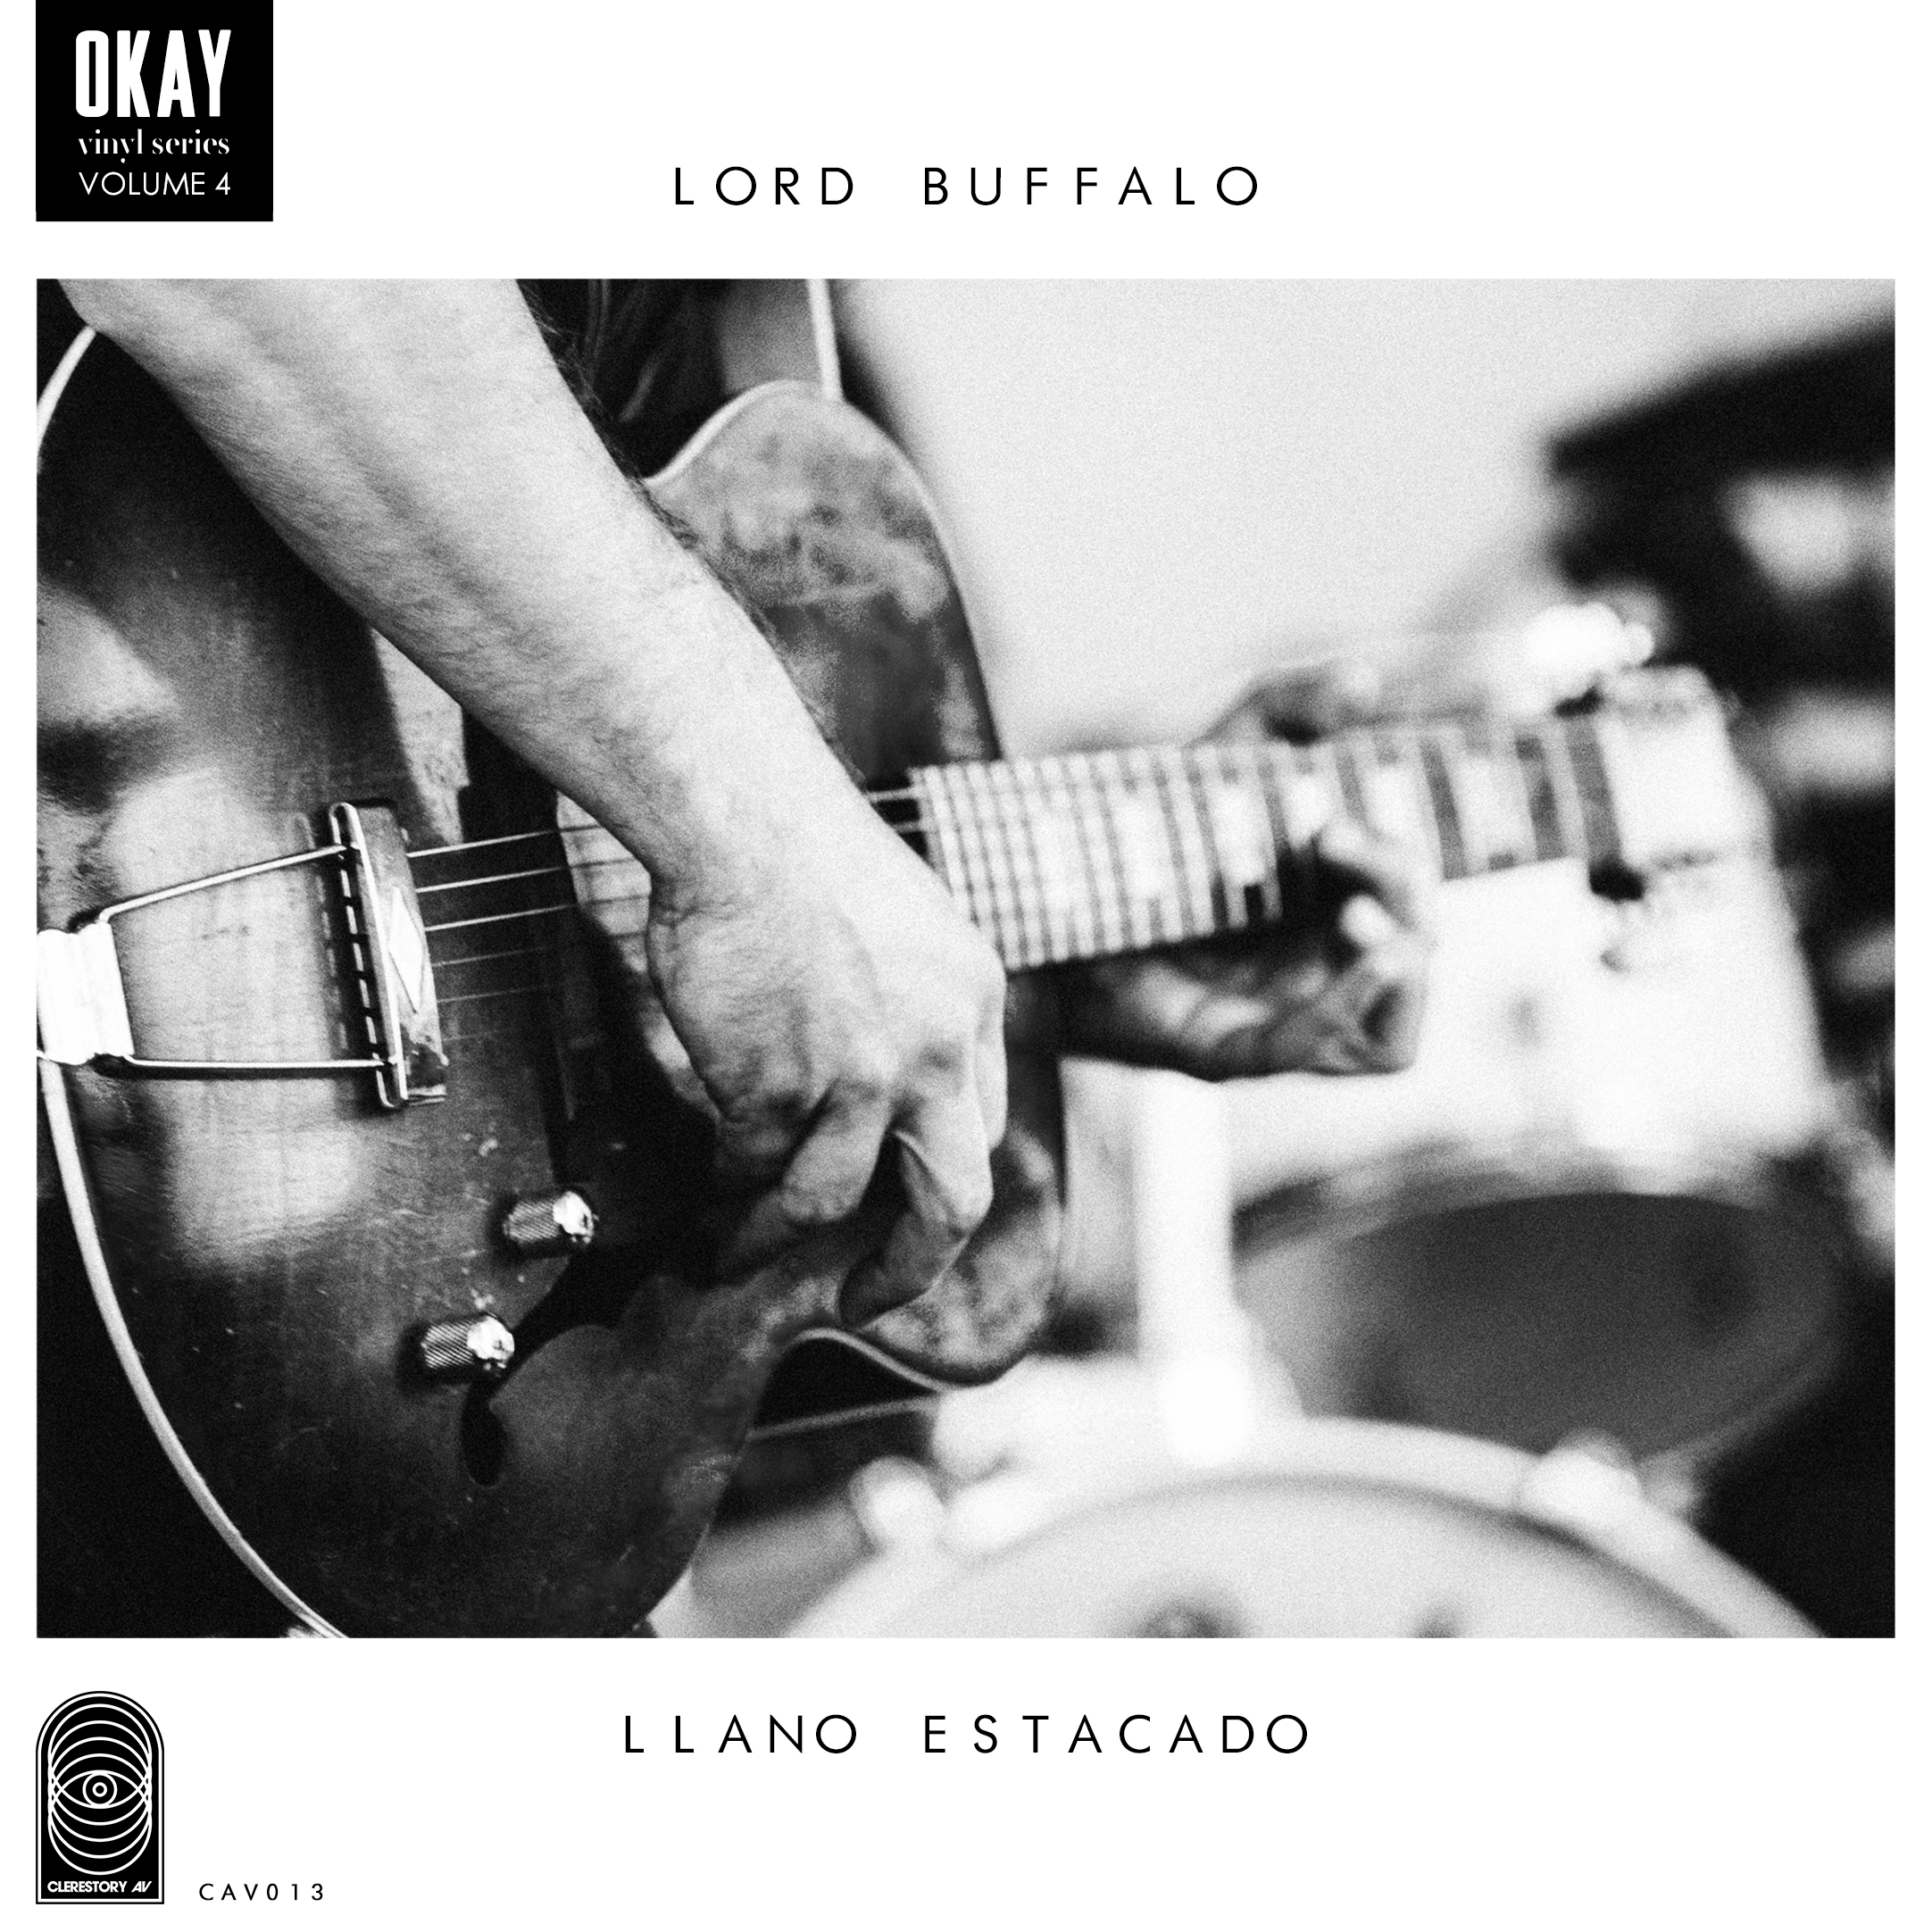 LORD BUFFALO / OKAY Vinyl Series Vol. 4